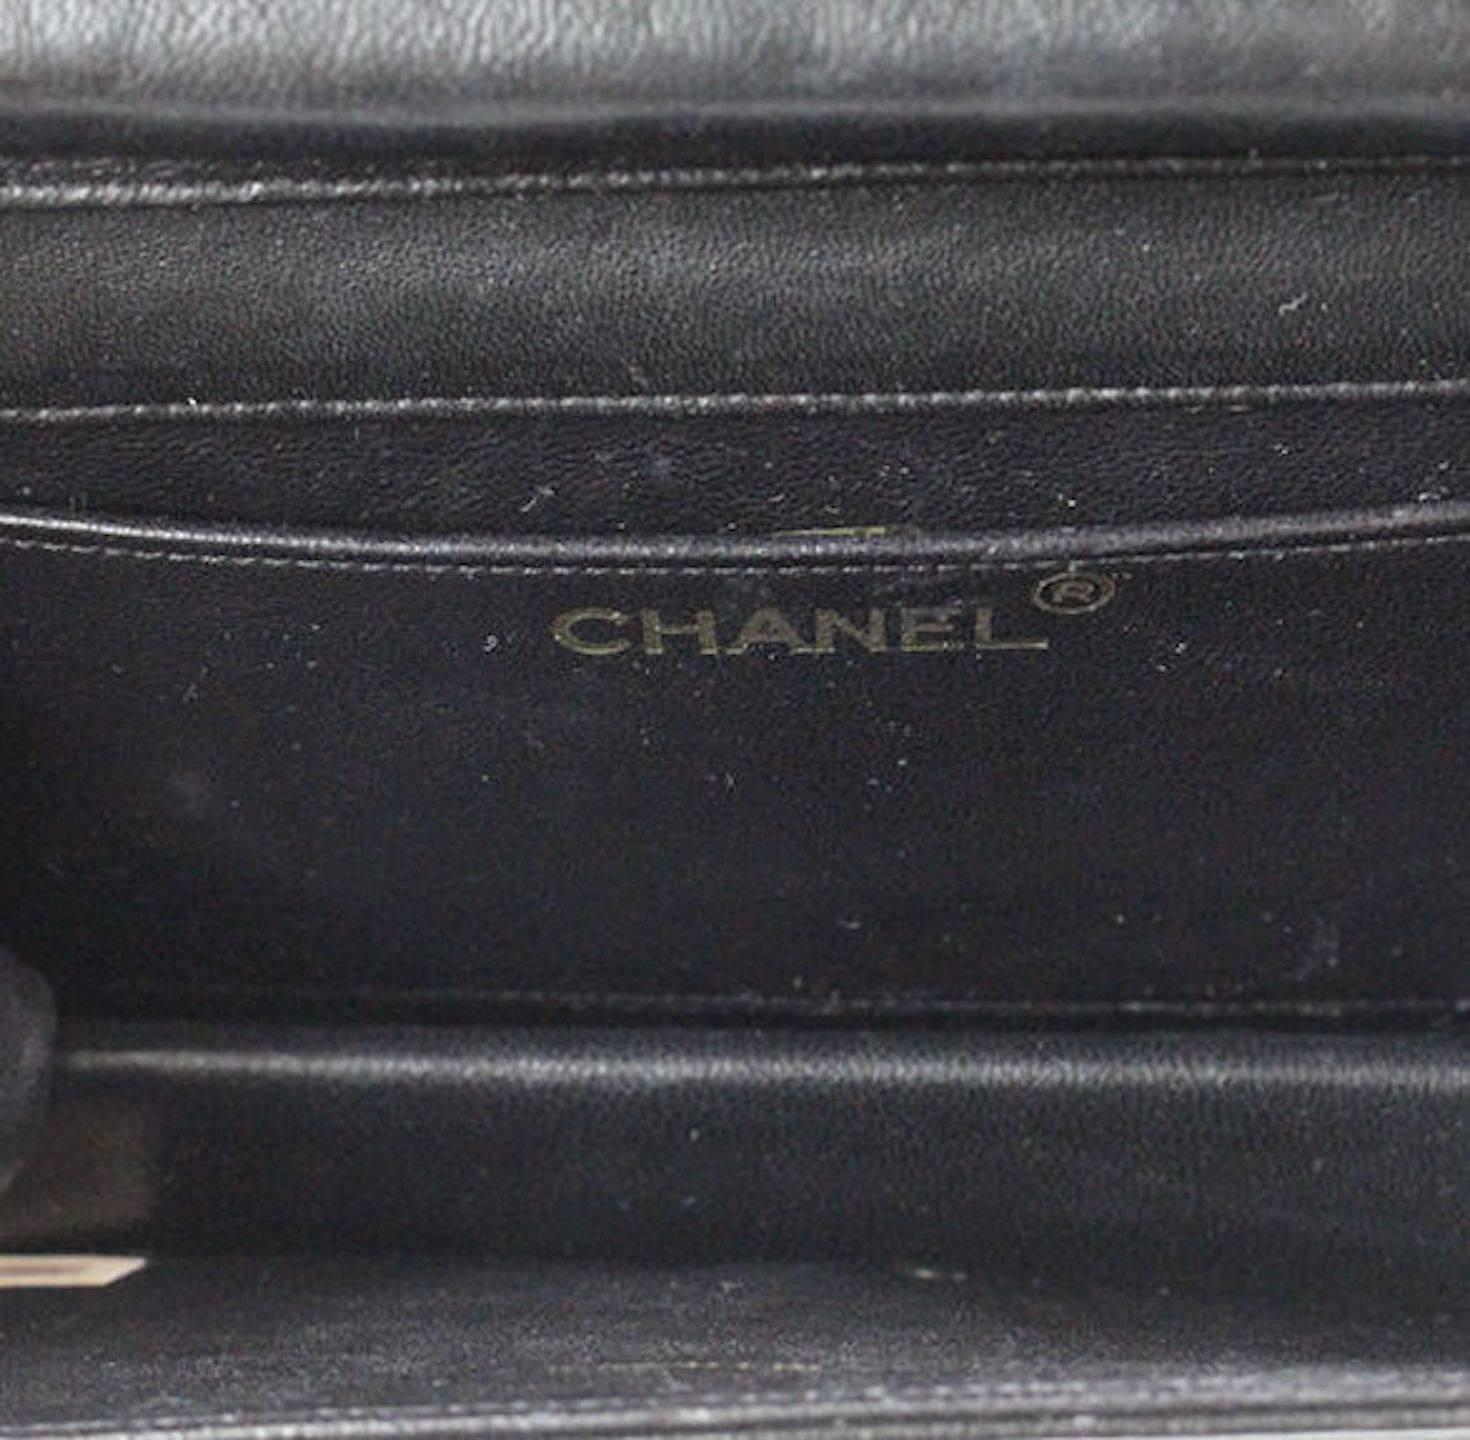 Chanel RARE Vintage Black Lizard Leather Gold CC Flap Crossbody Shoulder Bag 2